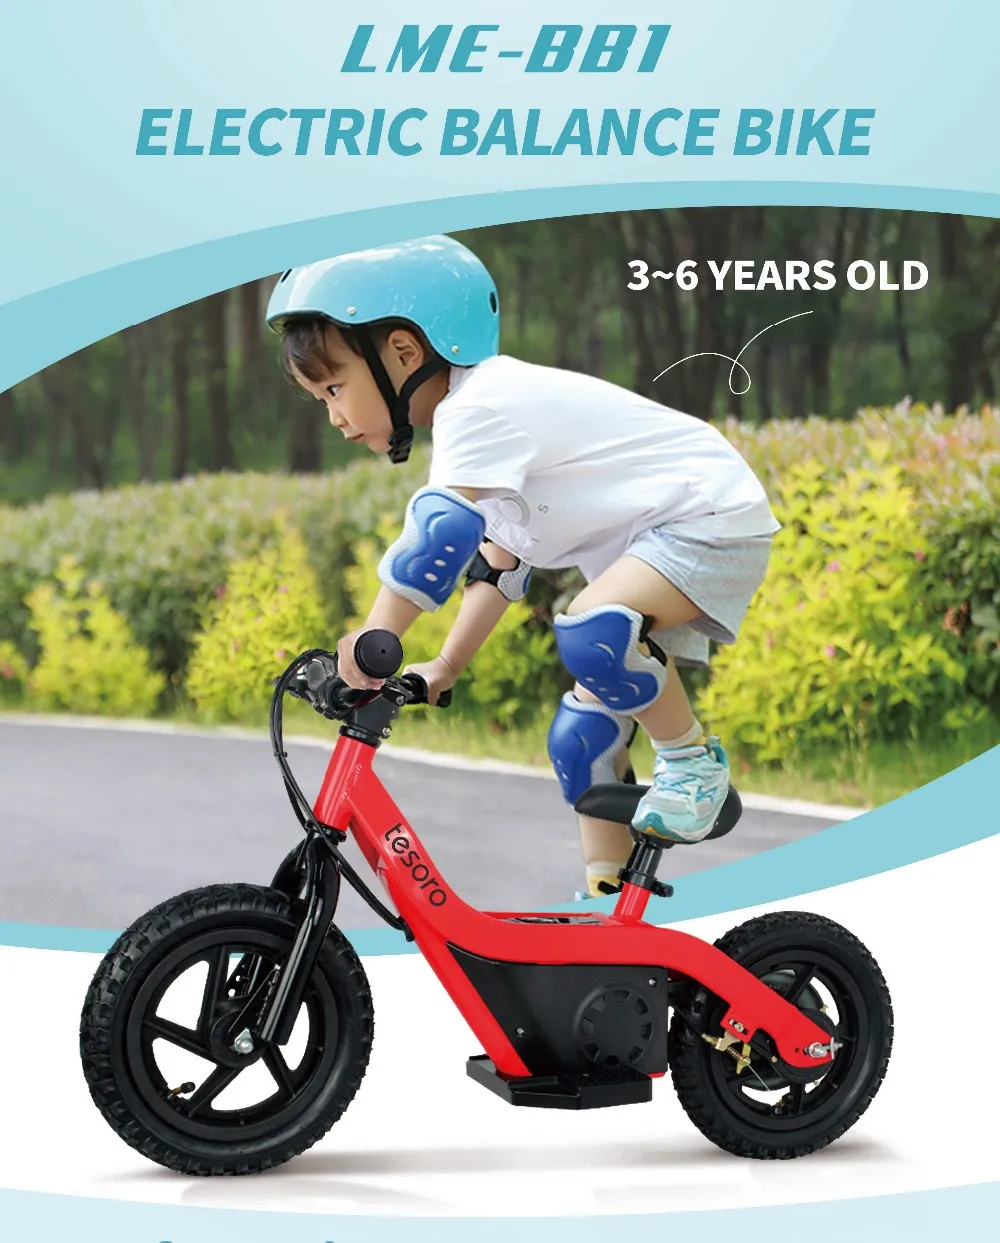 Hot sale electric balance bike 100w for 